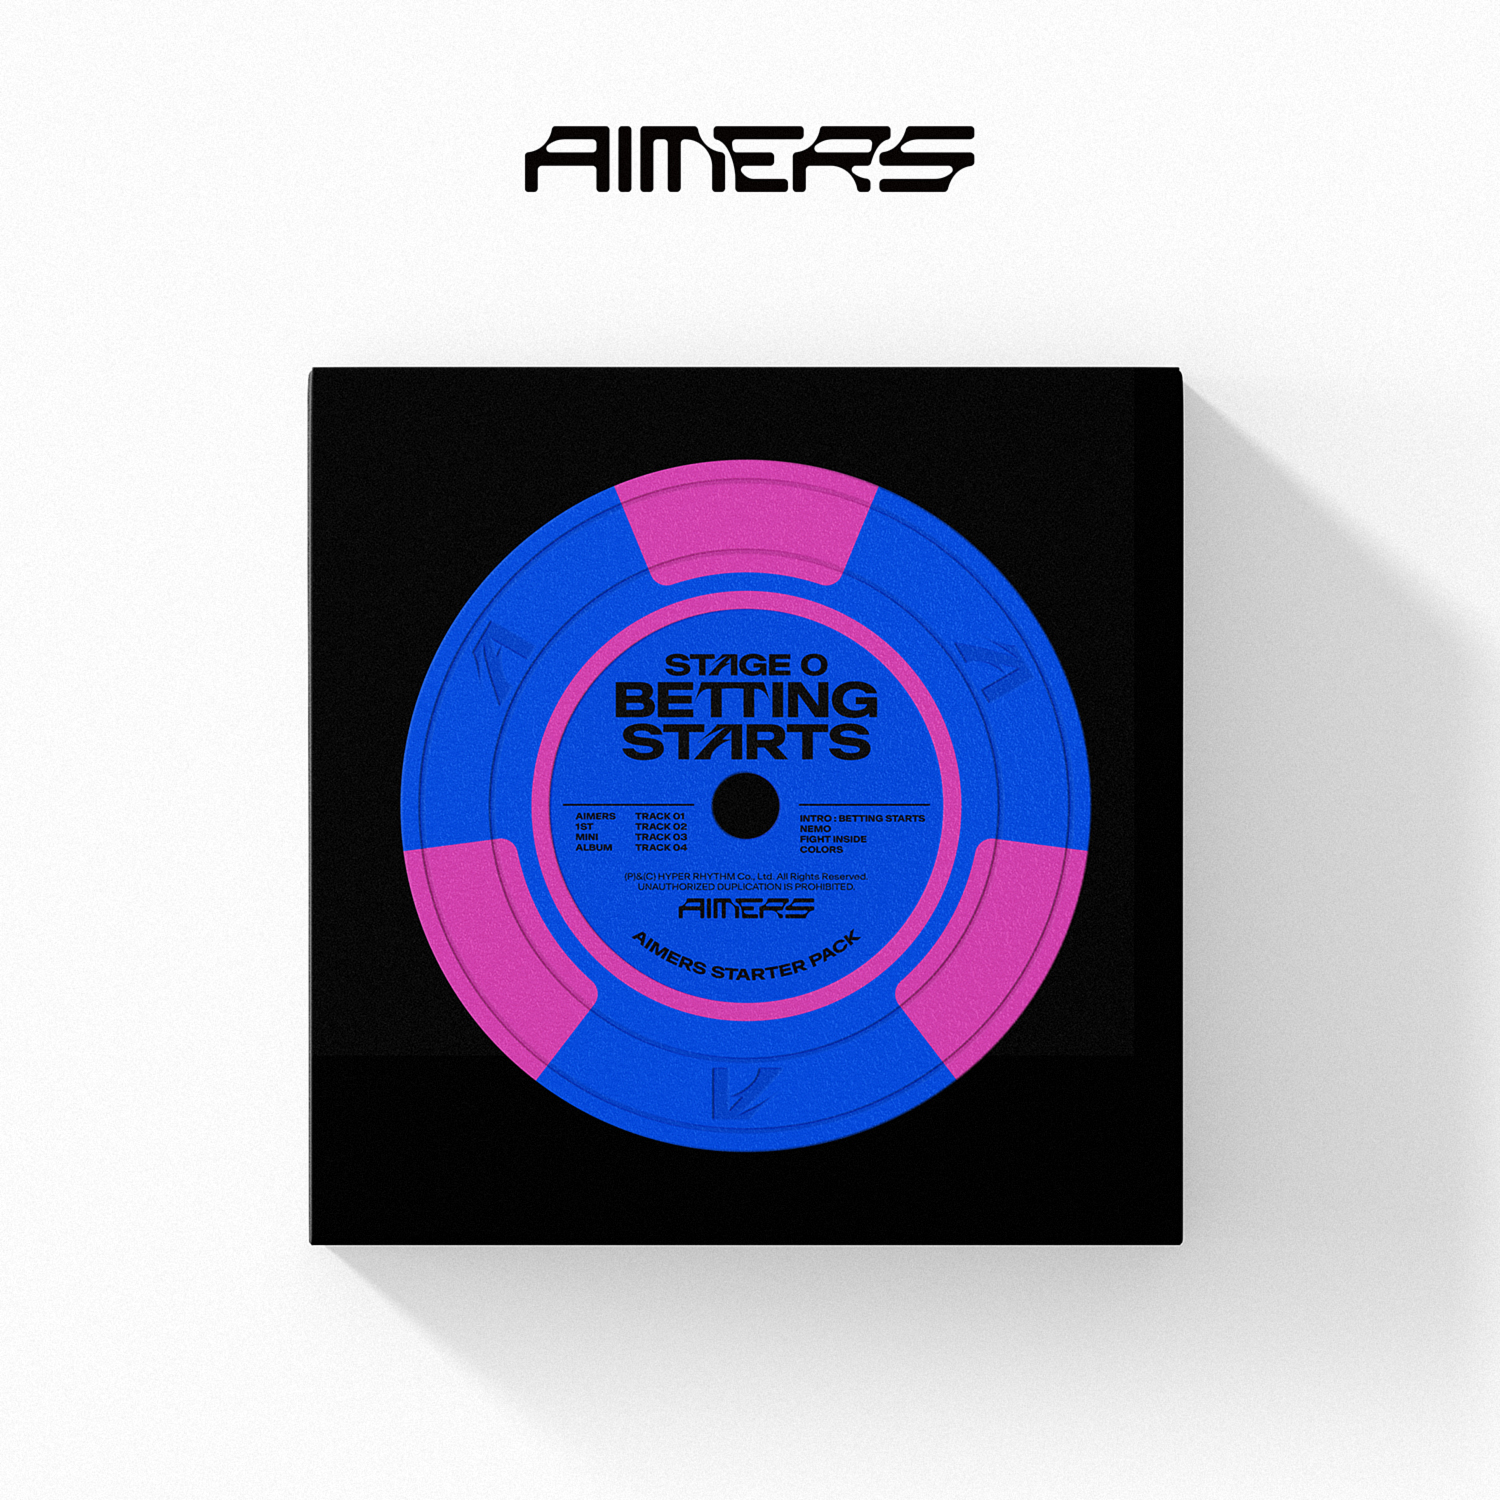 AIMERS - 1st MINI ALBUM [STAGE 0. BETTING STARTS]